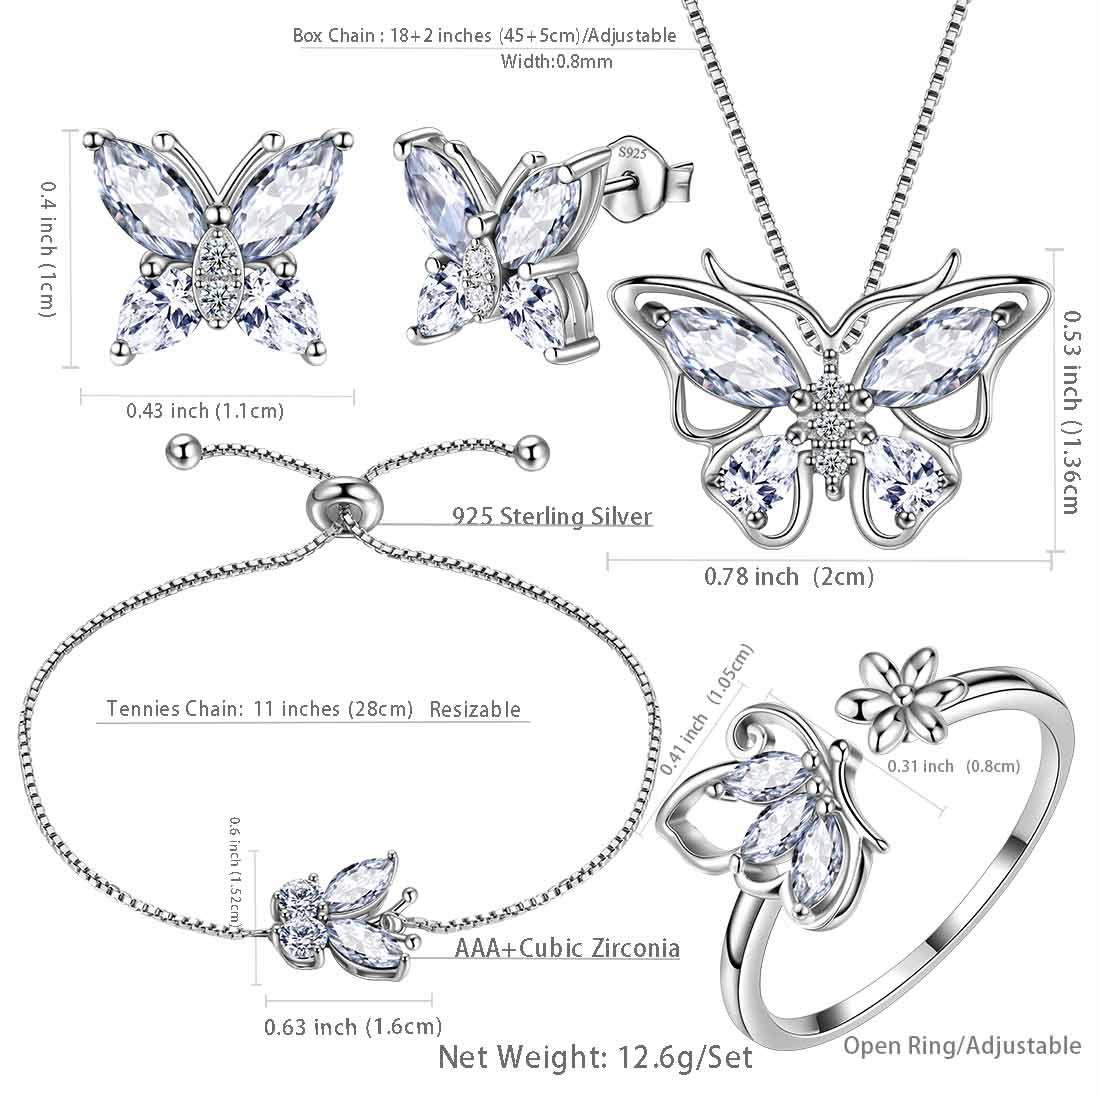 Butterfly Birthstone April Diamond Jewelry Set 5PCS - Jewelry Set - Aurora Tears